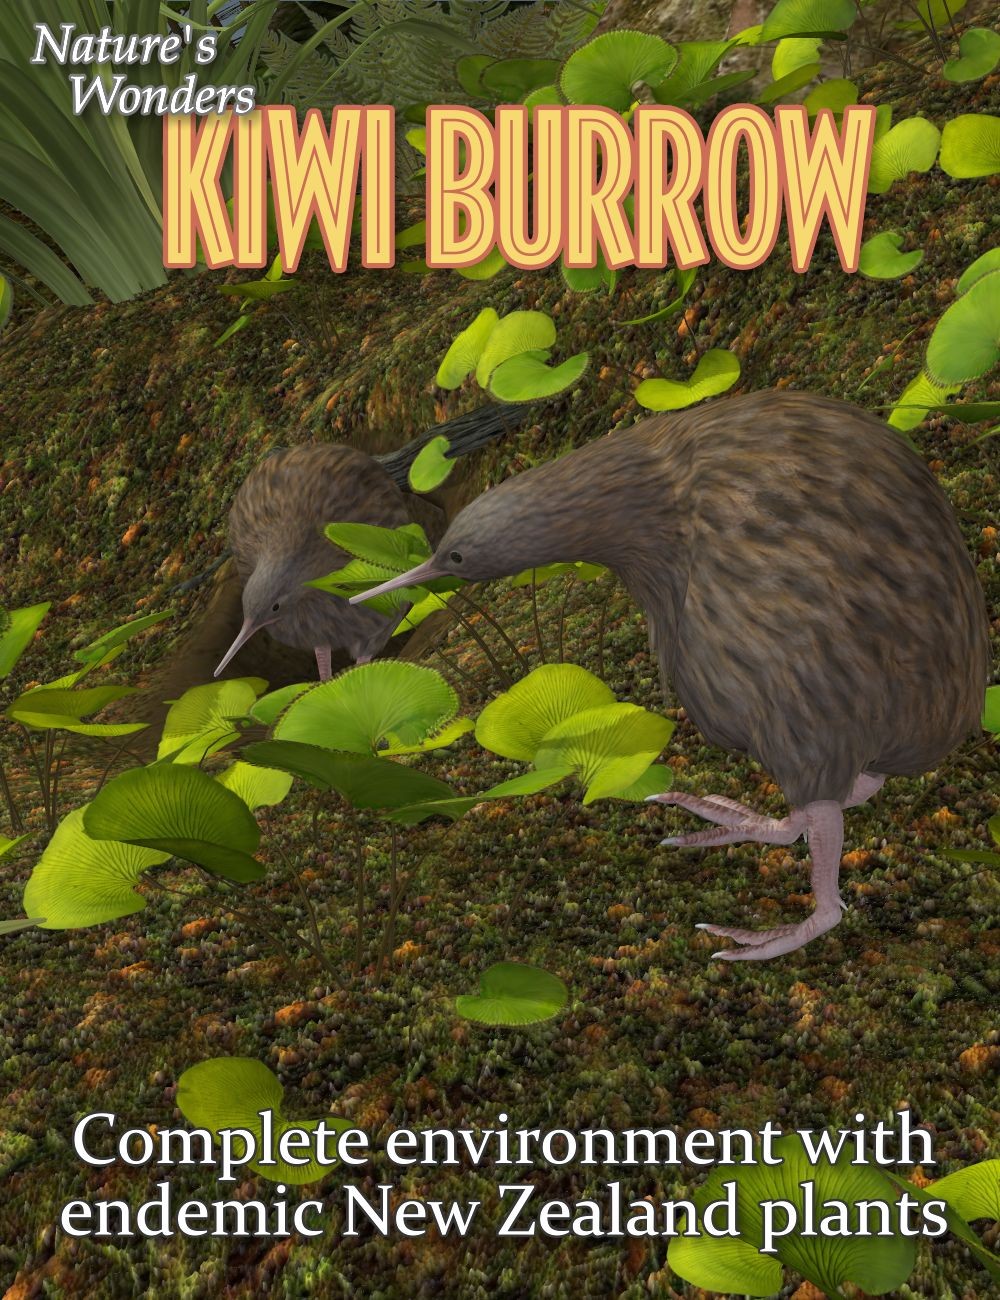 11080-nature-s-wonders-kiwi-burrow-main.jpg